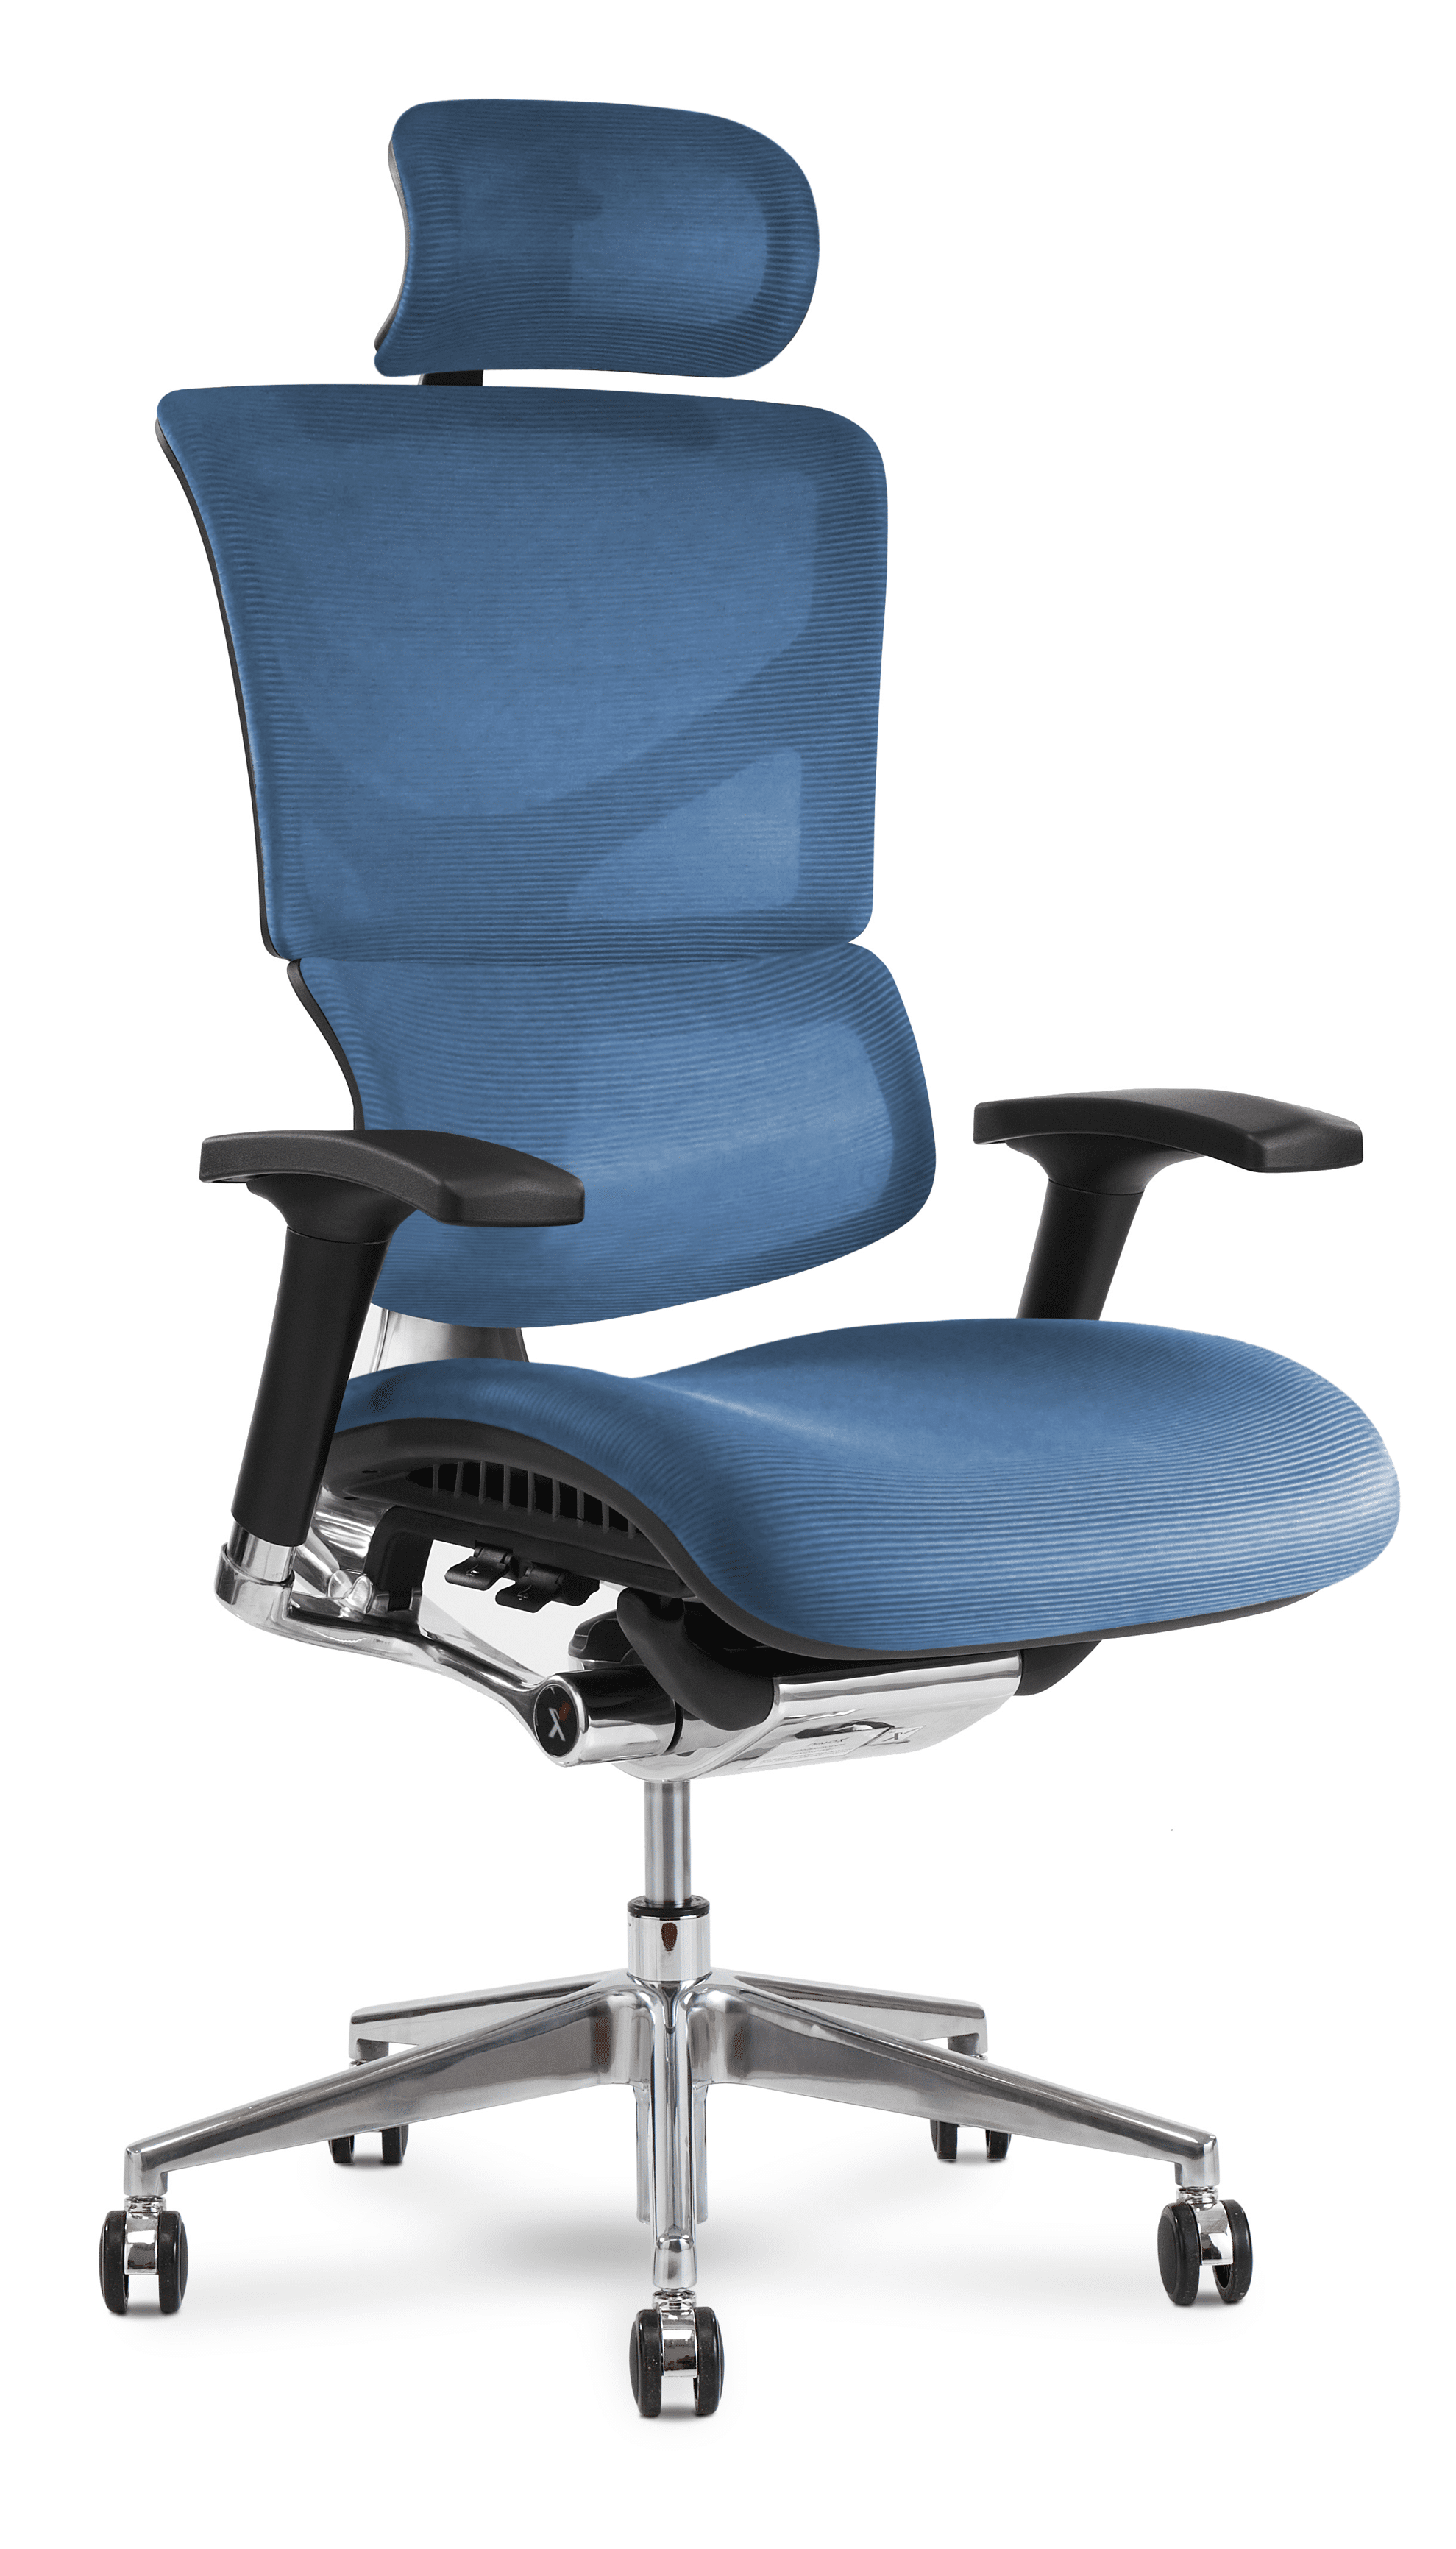 X-Chair Ergonomic Office Chair - X3 with Headrest